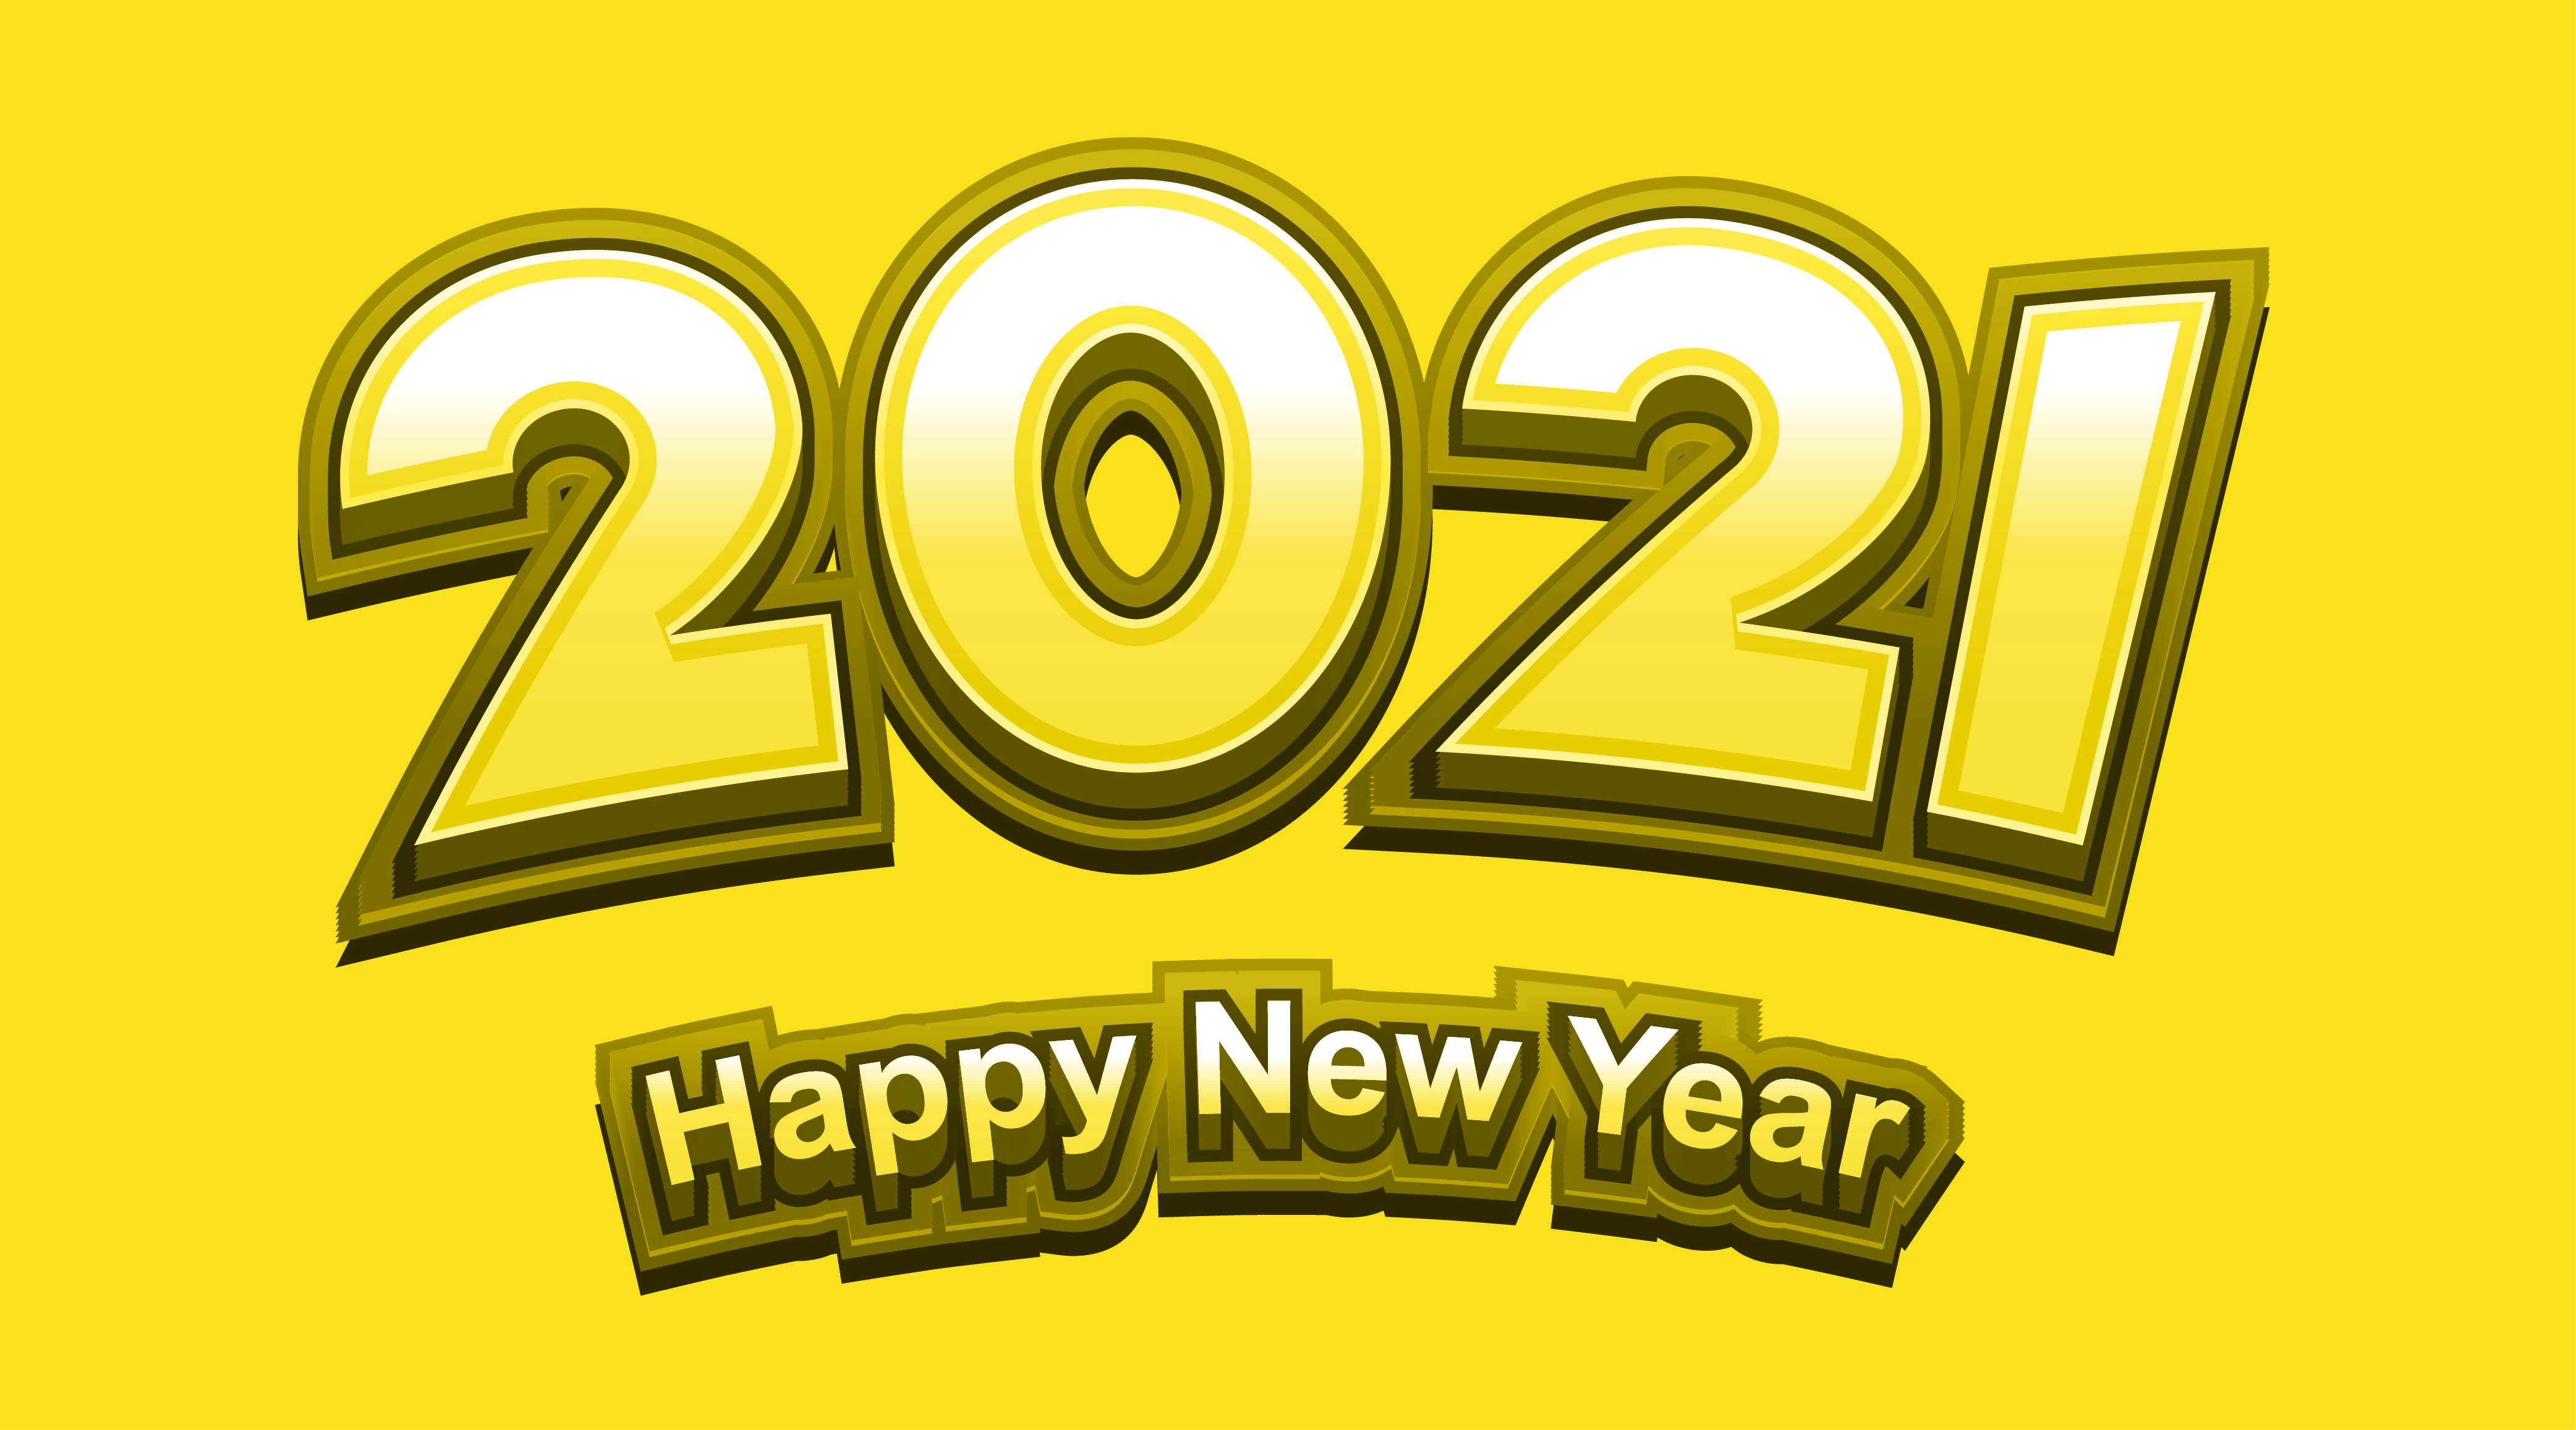 Free New Year Yellow Background 2021